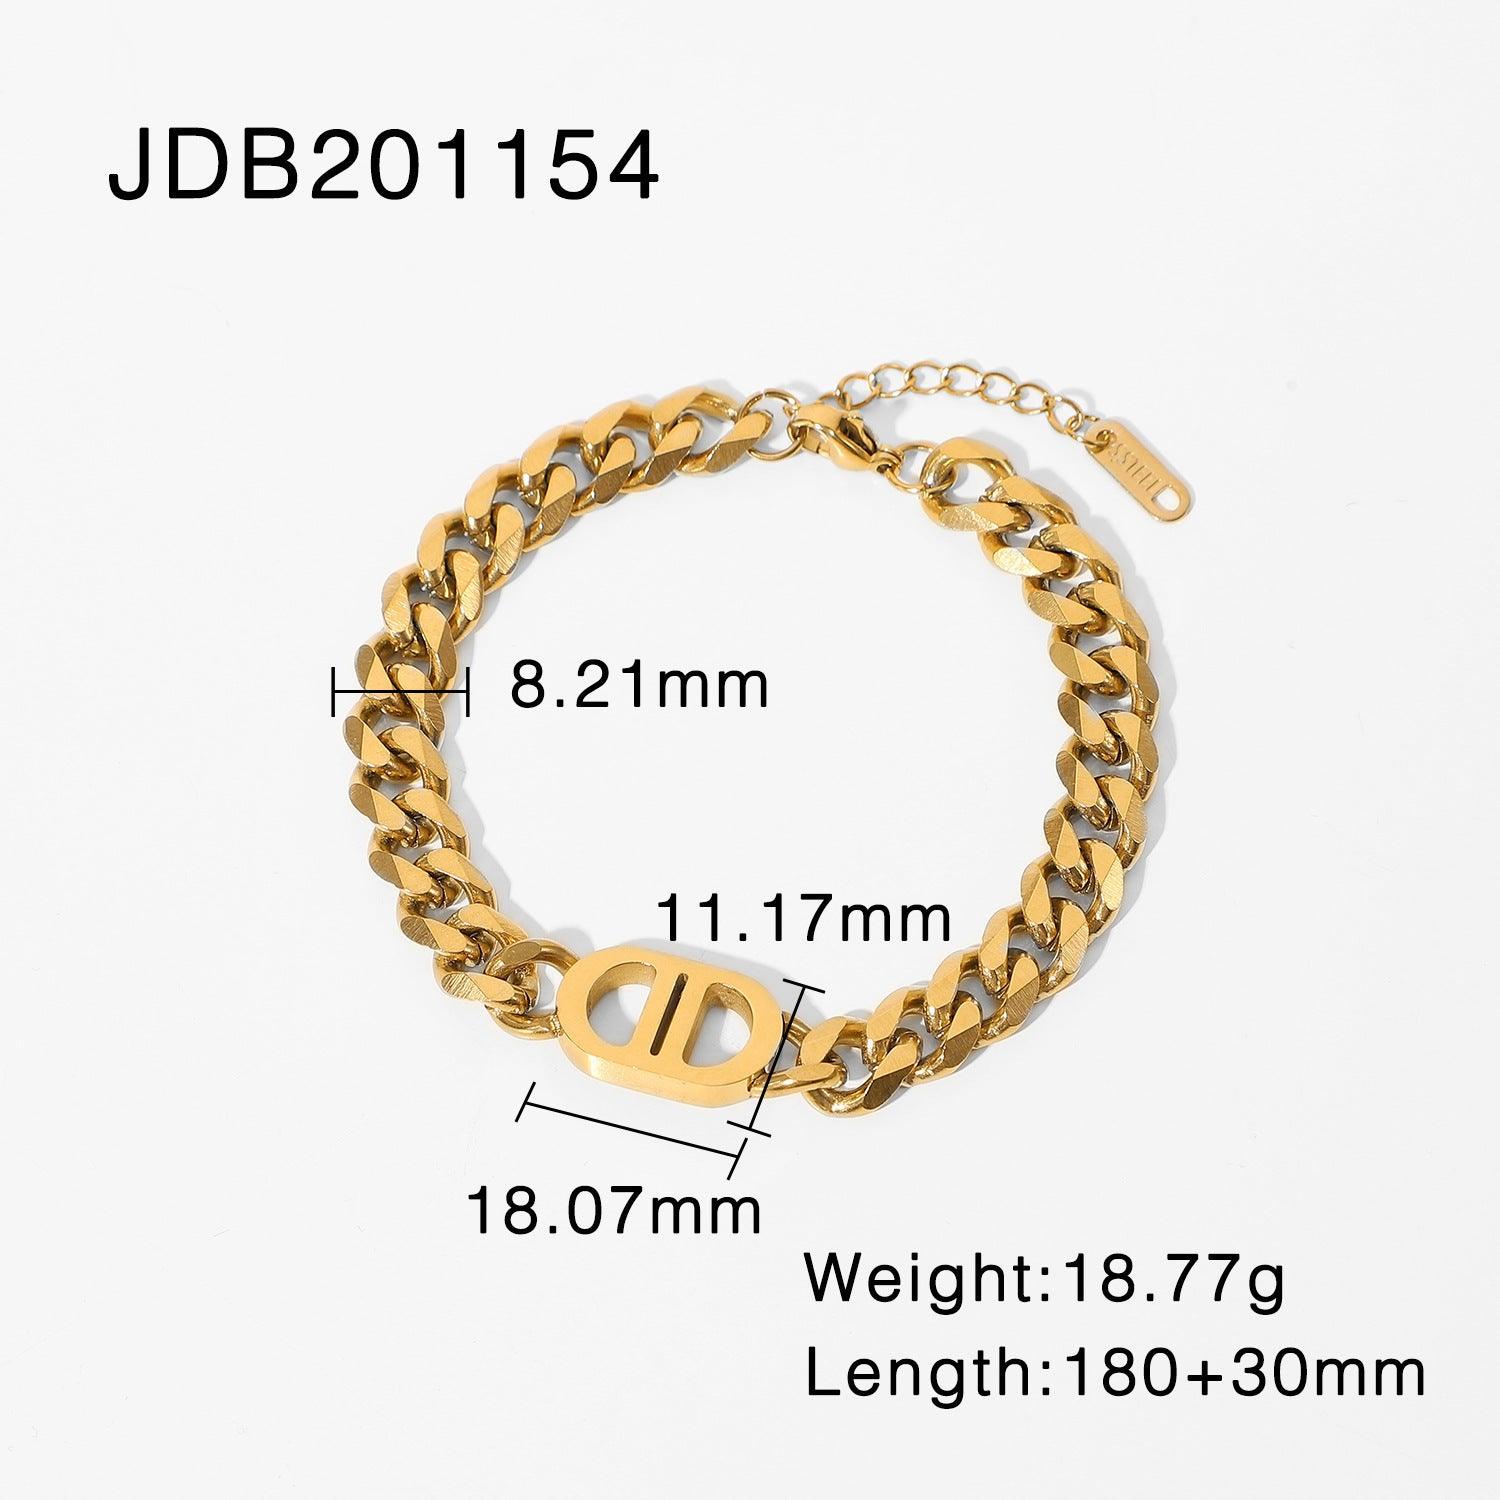 B17.18K Gold Cuban Chain Bracelet - Elle Royal Jewelry